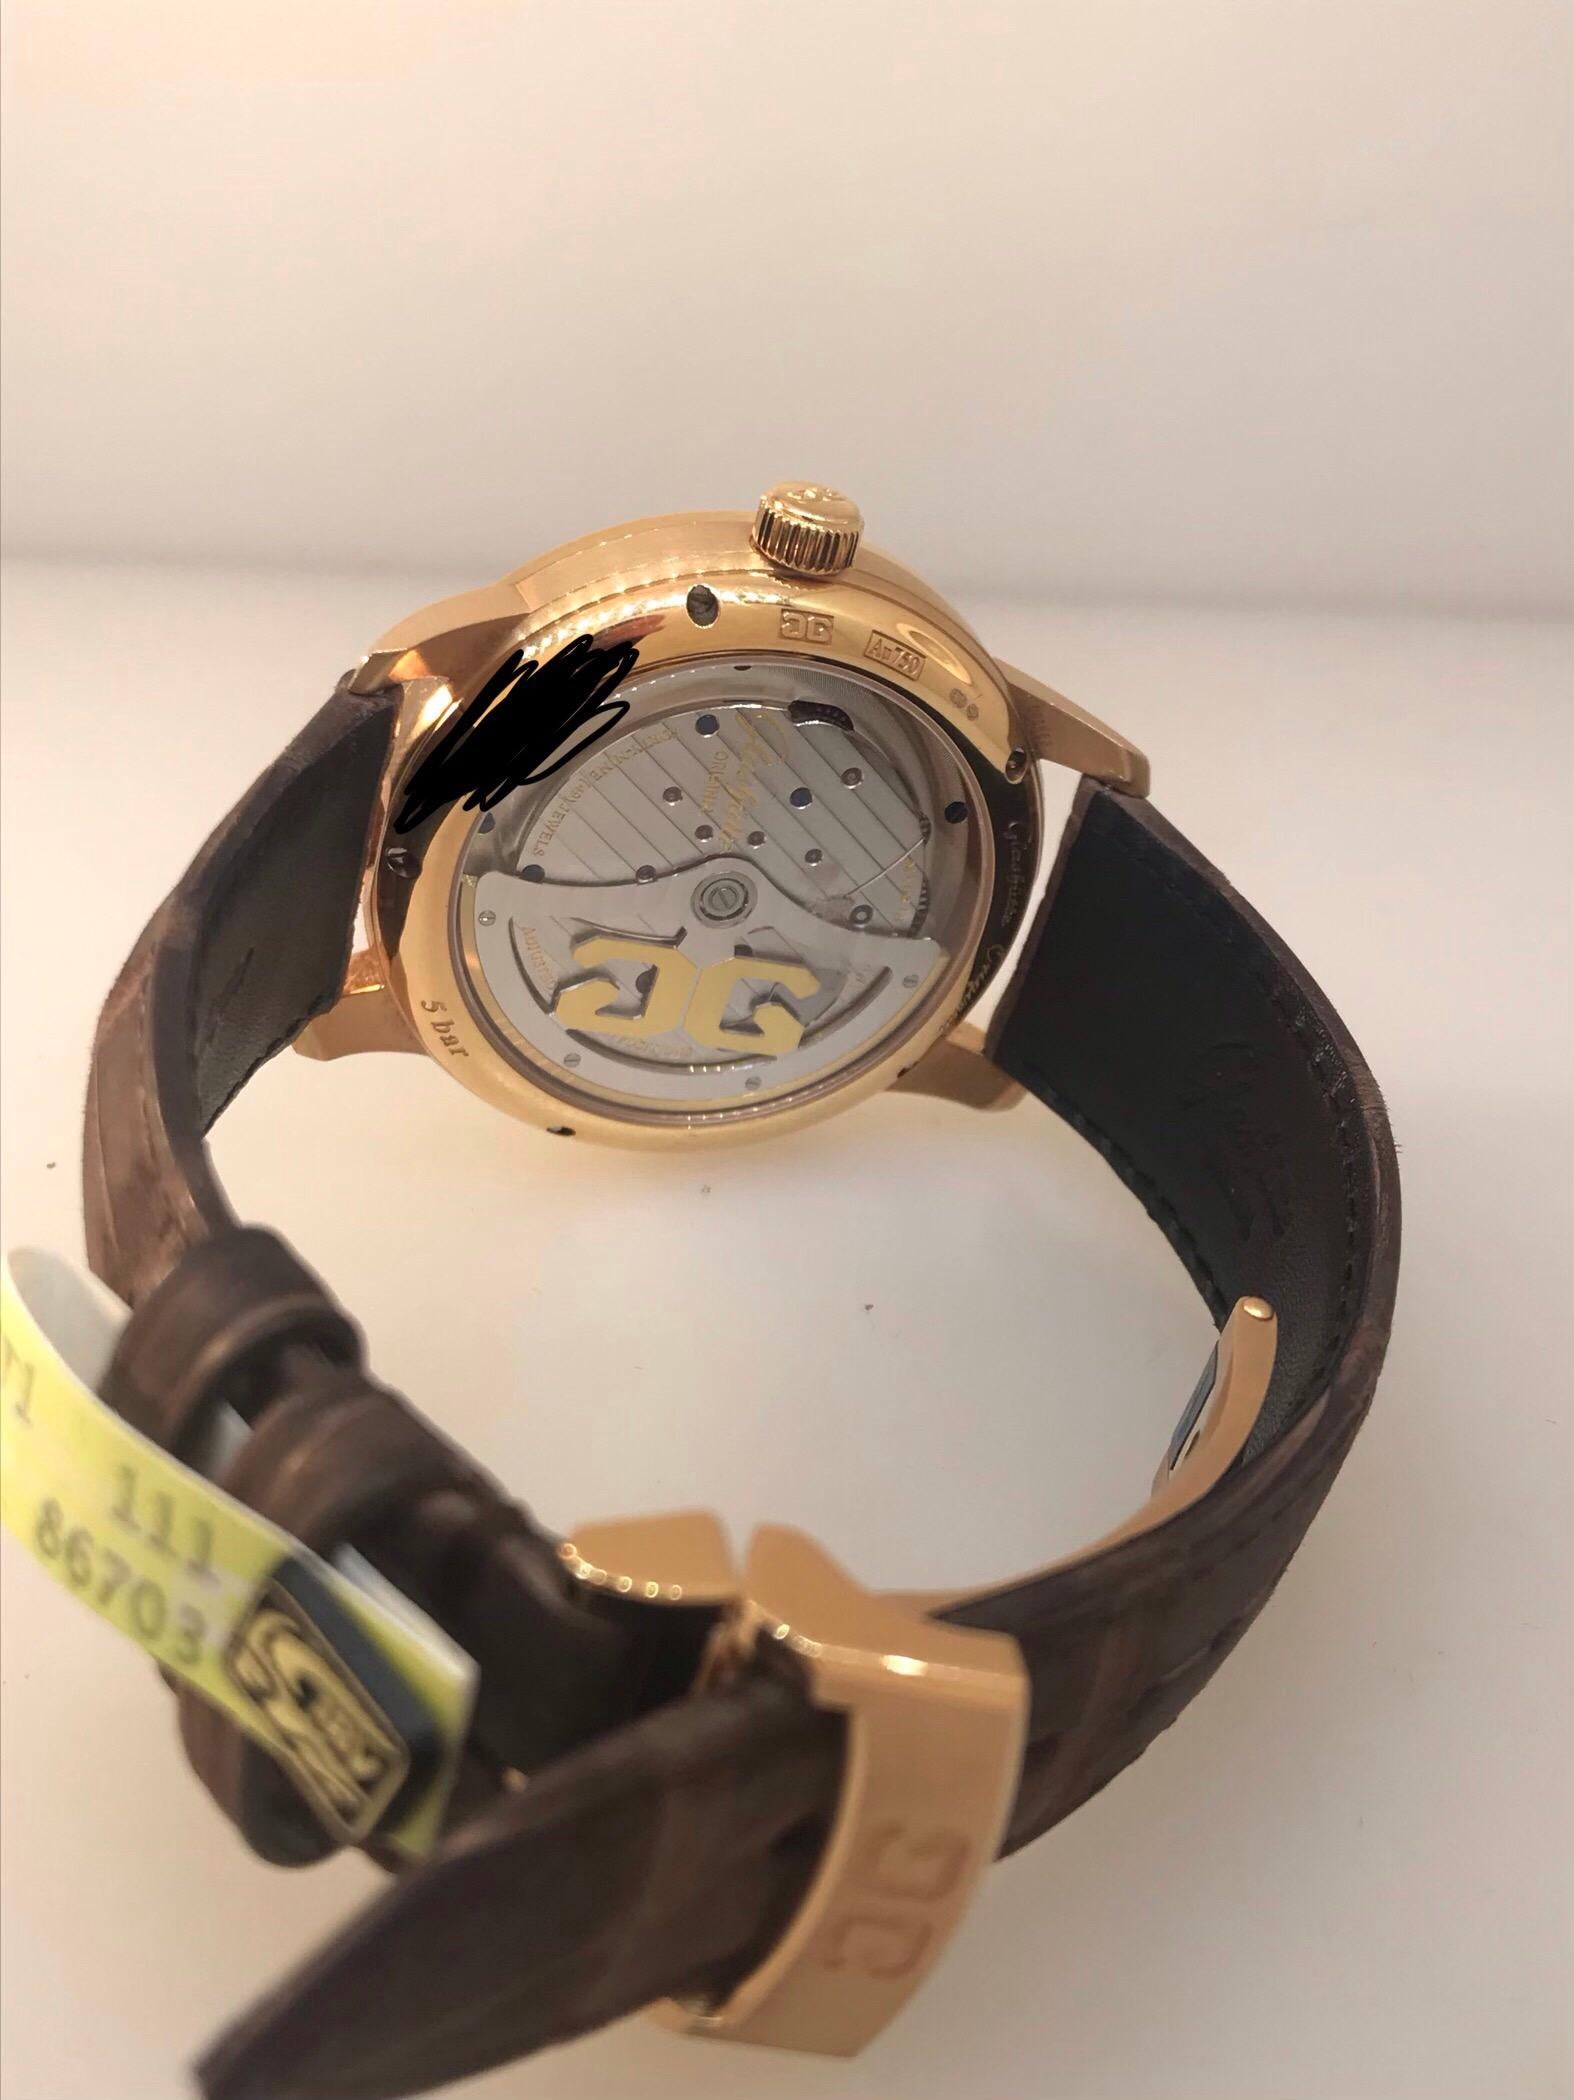 Glashutte Original PanoMaticInverse Rose Gold Automatic Watch 19102010530 For Sale 6